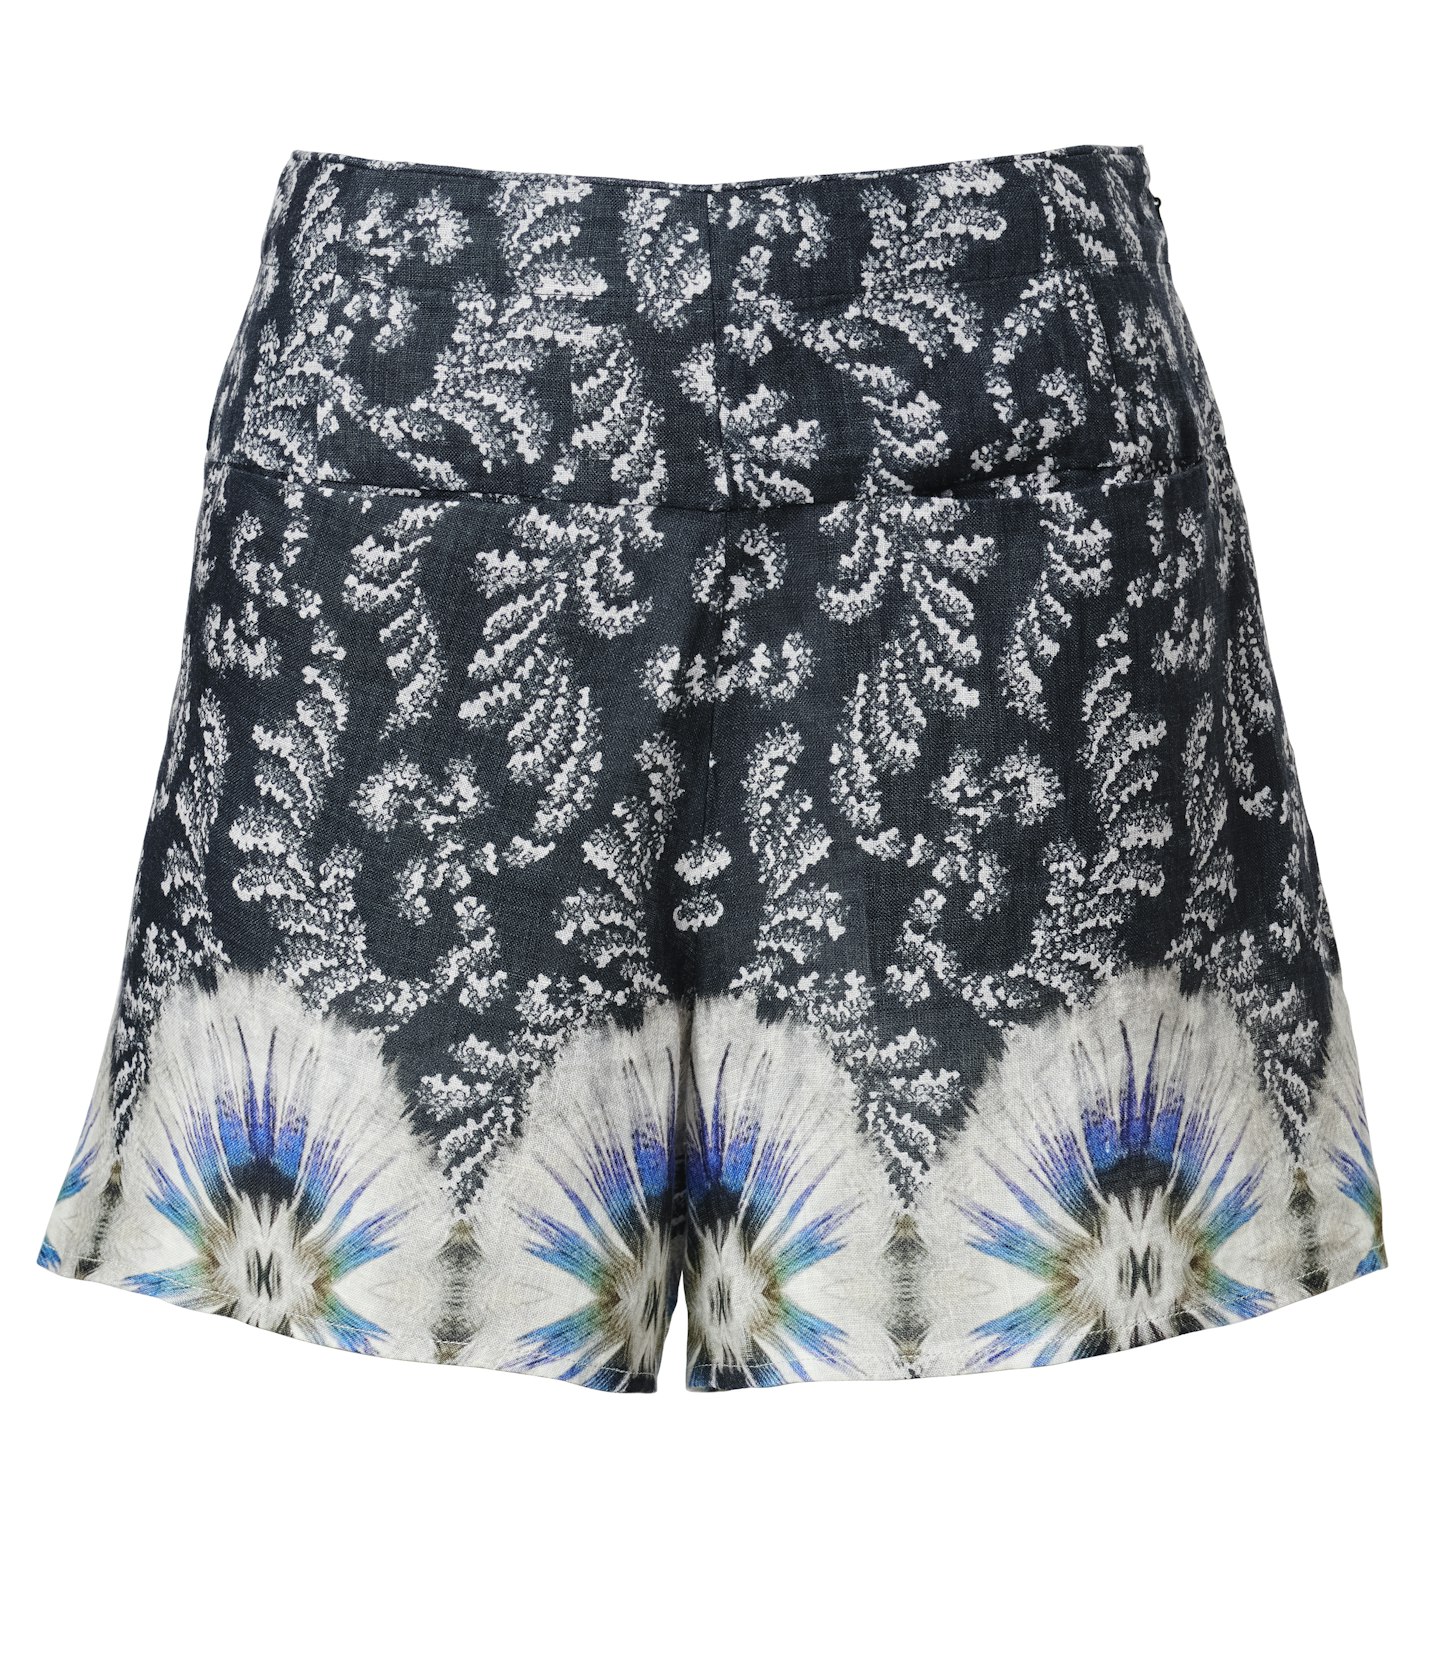 Patterned Linen Shorts, £39.99